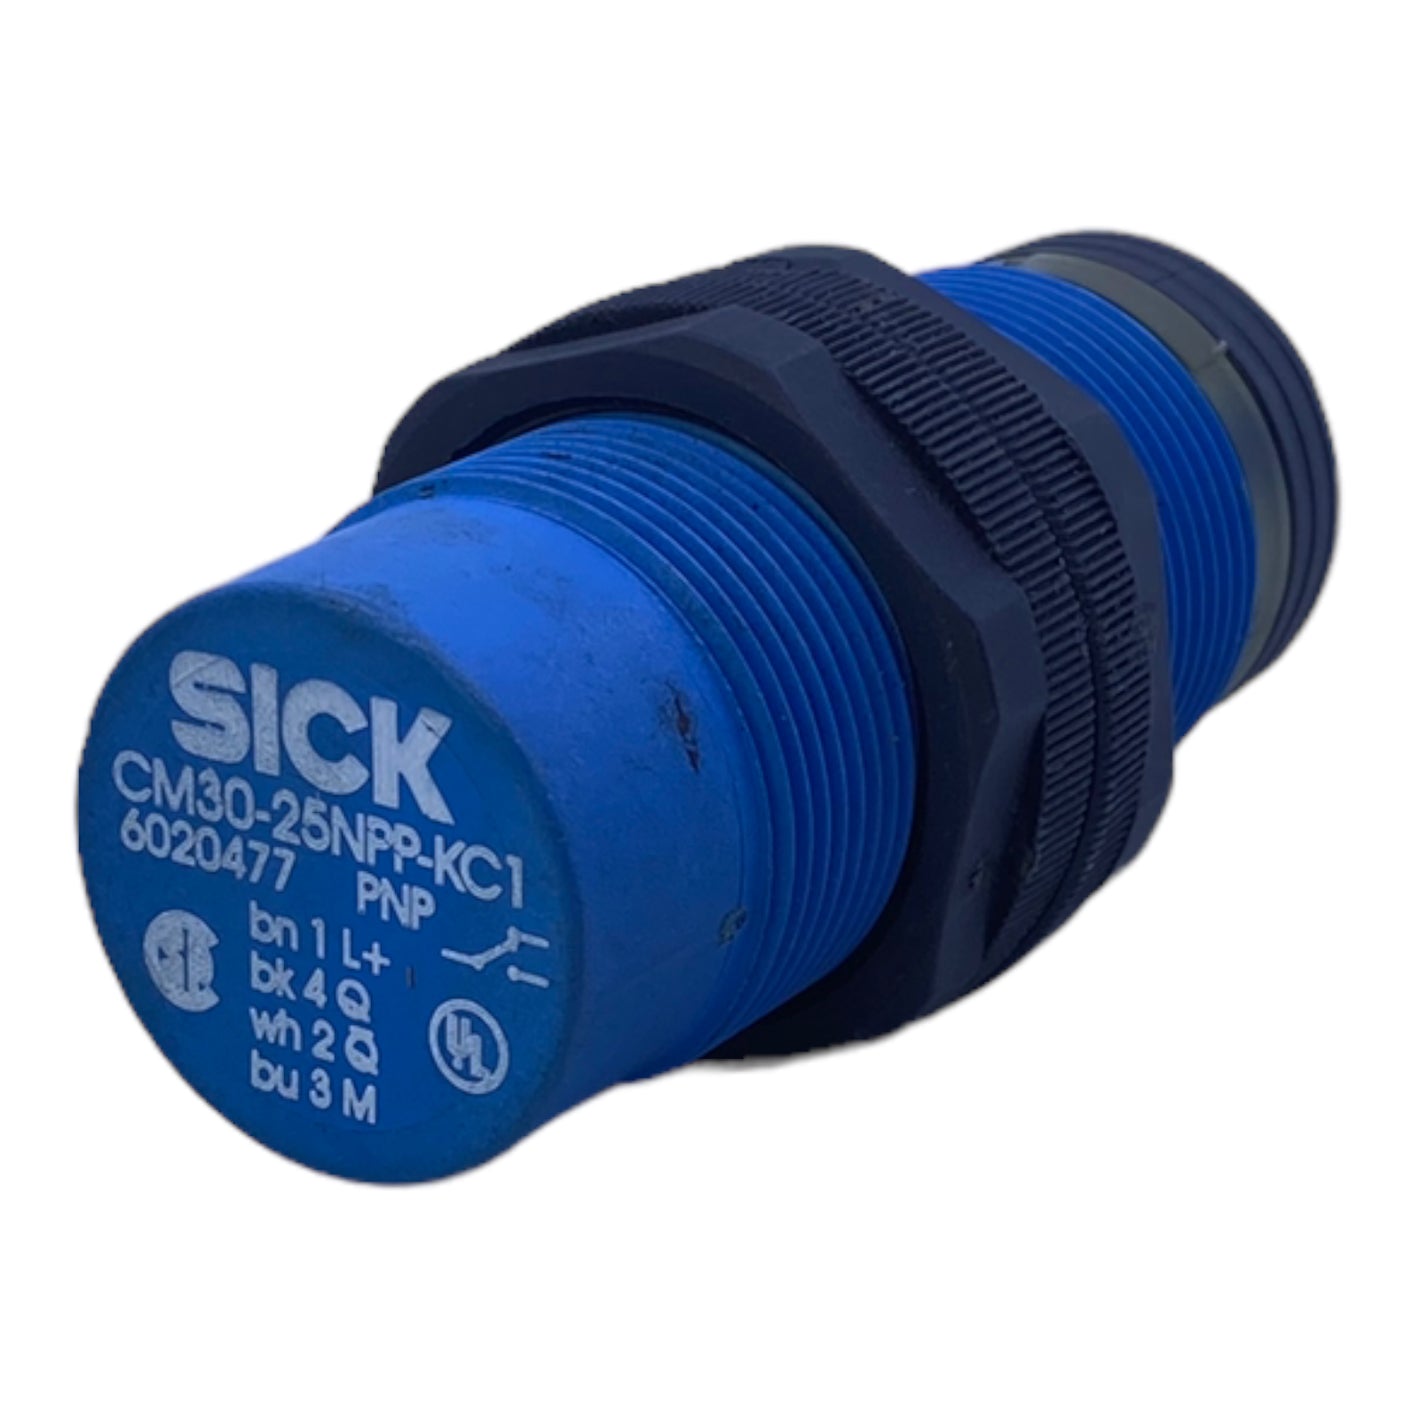 Sick CM30-25NPP-KC1 proximity sensor 6020477 4-pin IP67 10V DC ... 36V DC 50Hz 